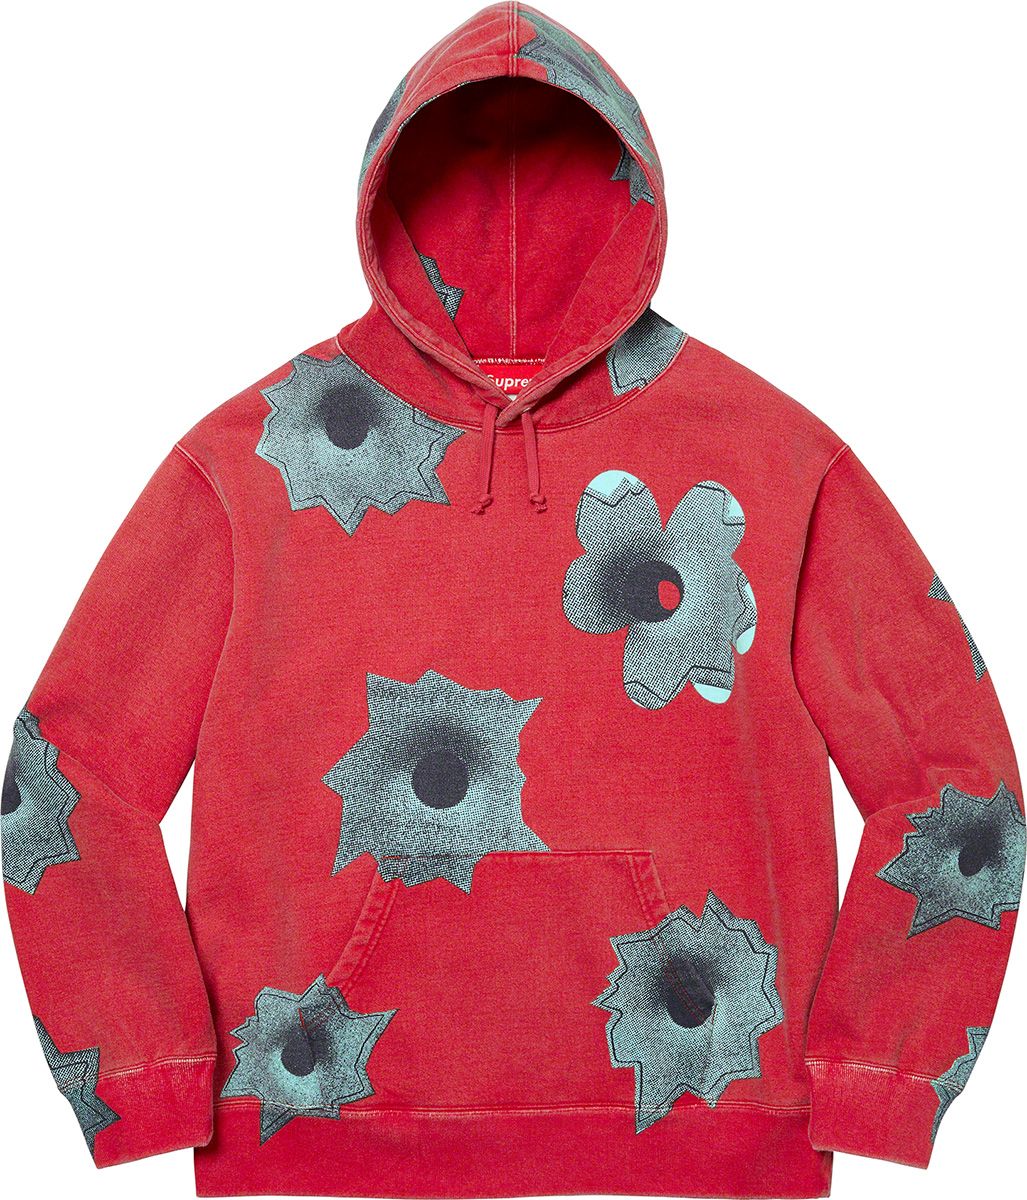 Reverse Patchwork Zip Up Hooded Sweatshirt - Spring/Summer 2022 